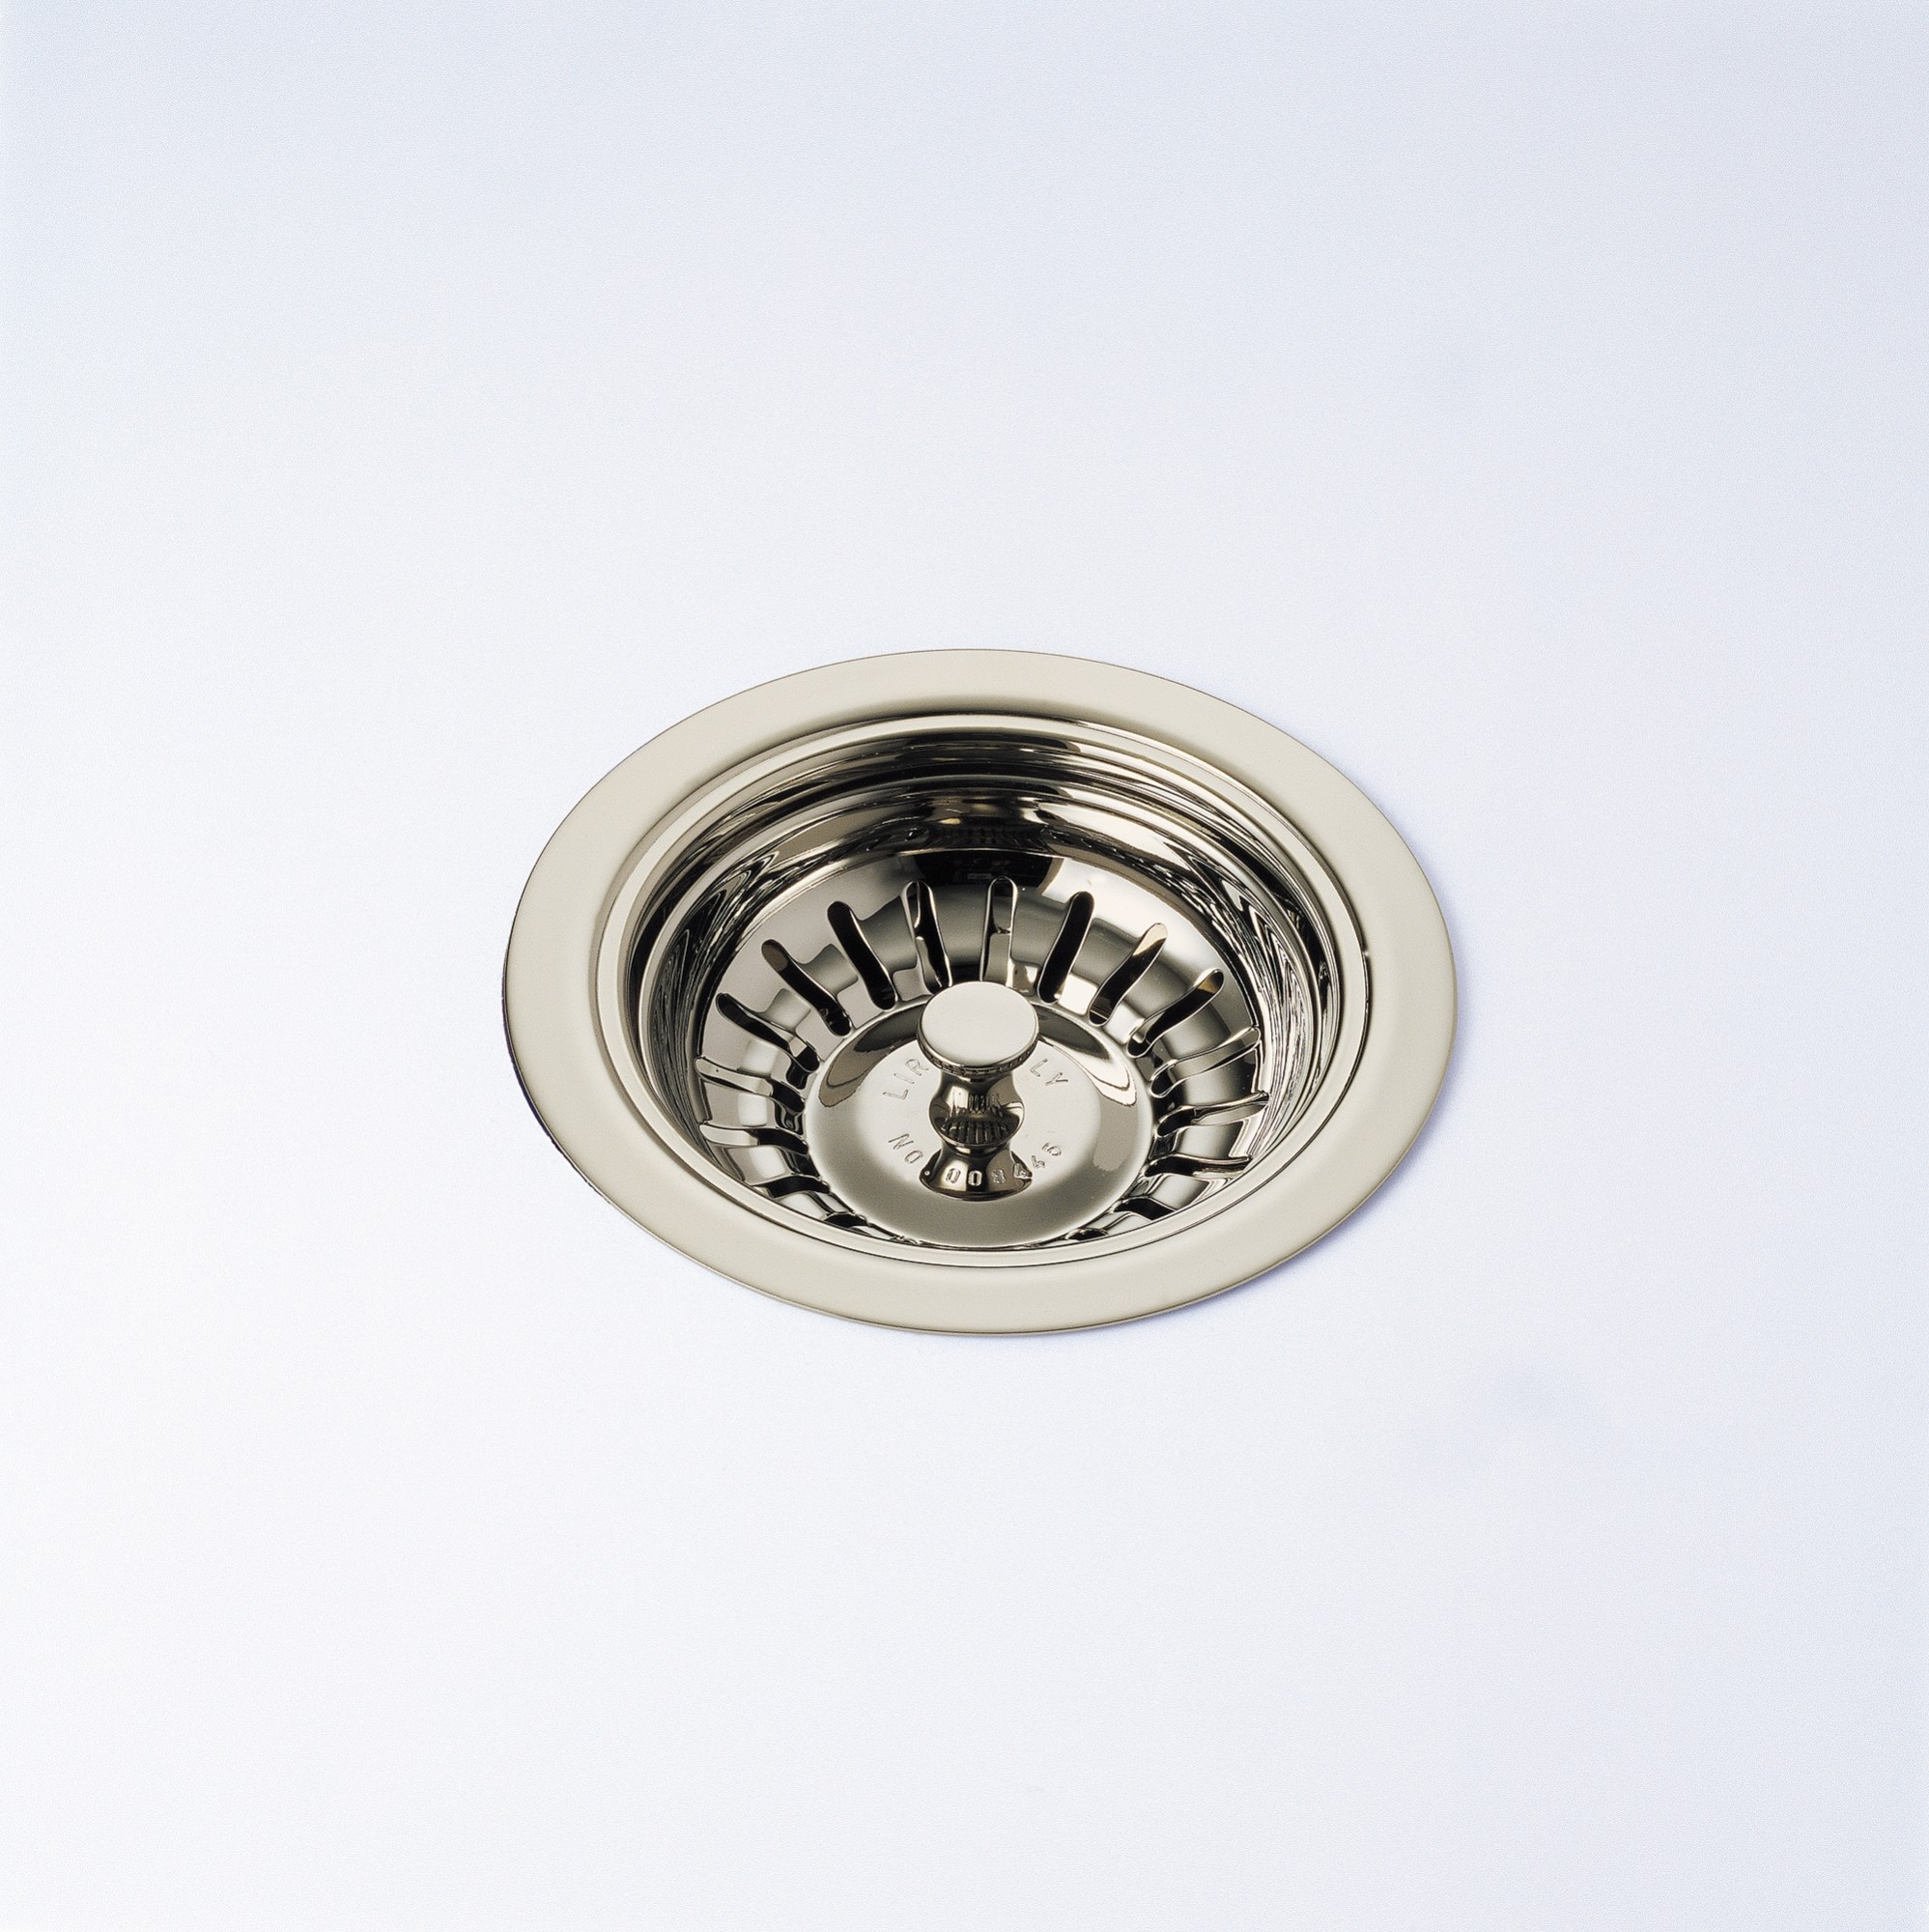 Delta 72010 Basket Strainer Flange For Standard Kitchen Sink Drain Openings - Chrome - image 3 of 7